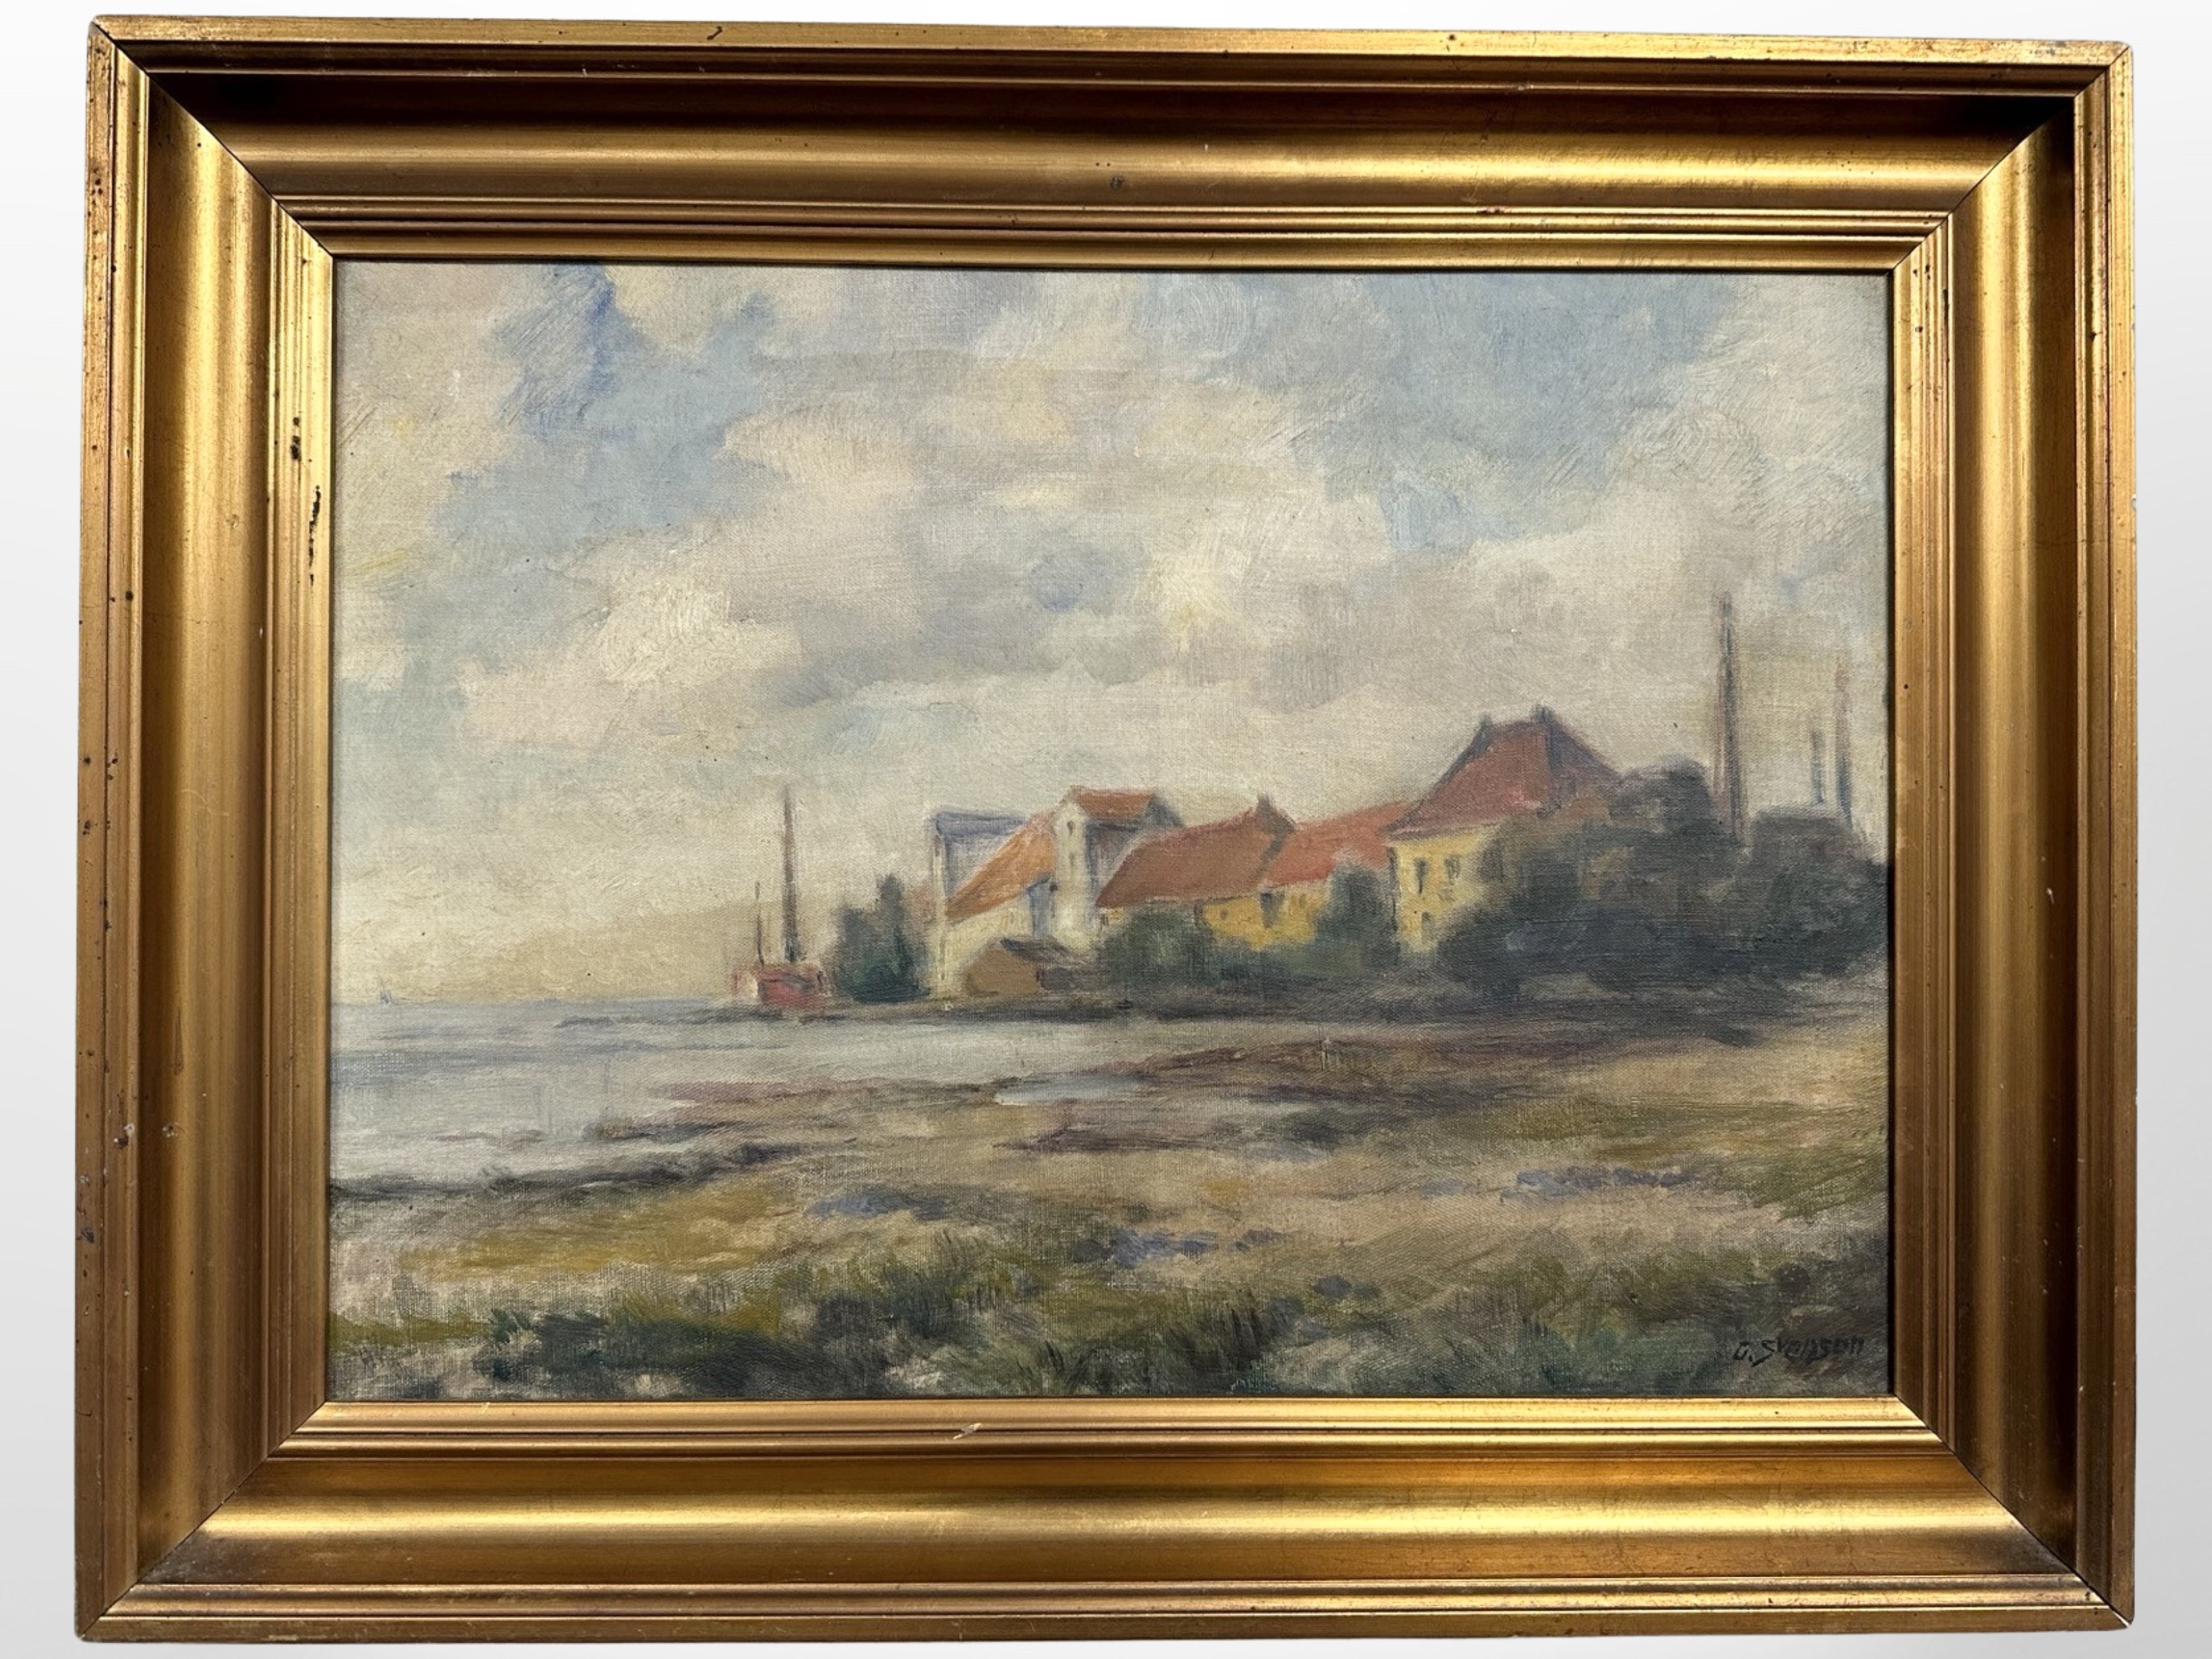 G Svensen : Buildings by a coast, oil on canvas, 39cm x 28cm.